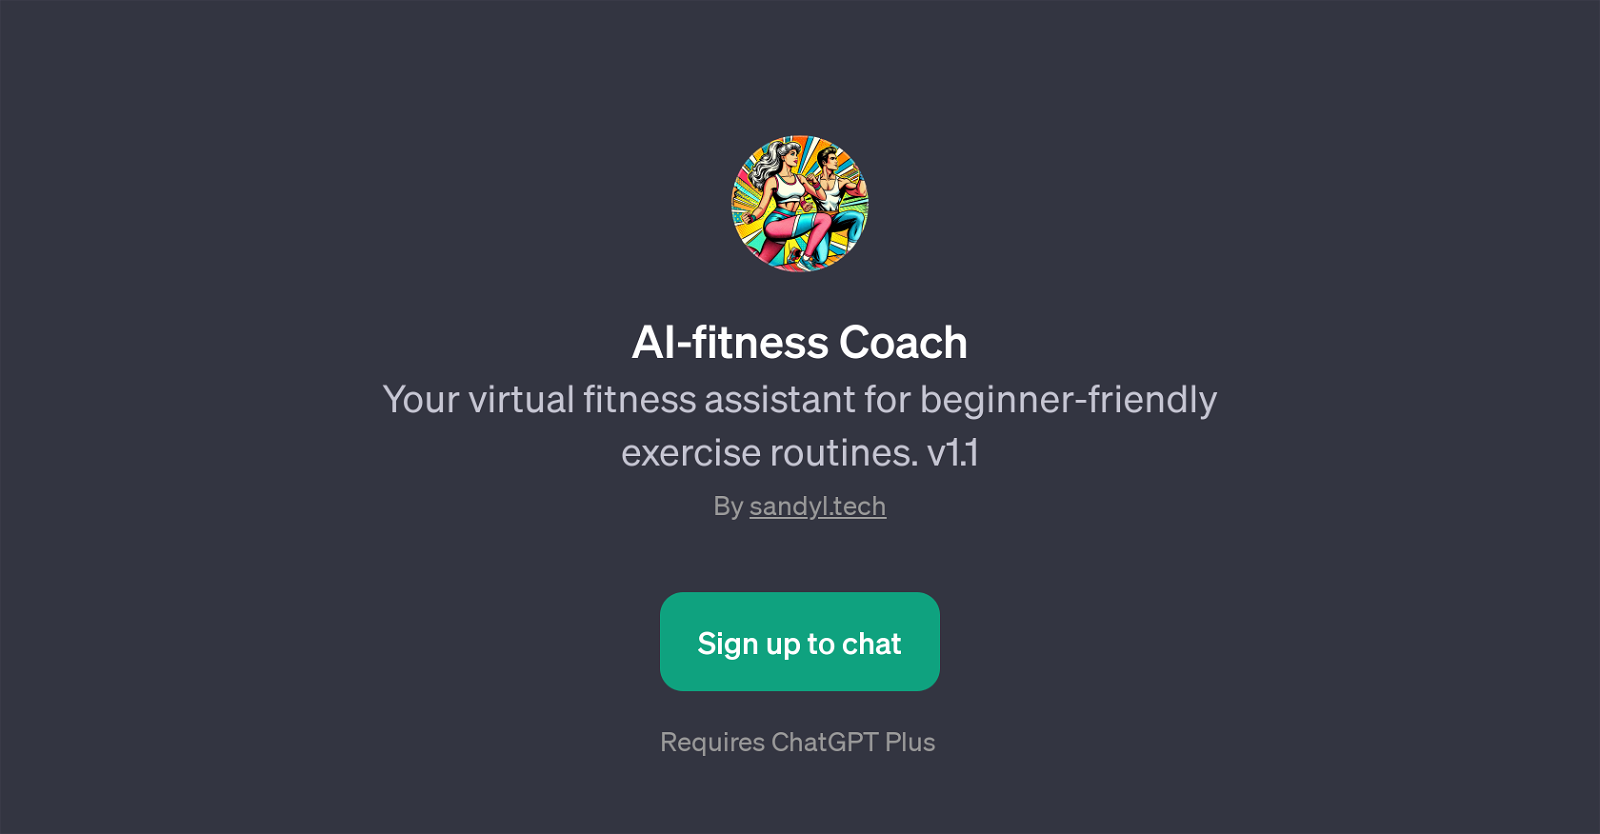 AI-fitness Coach website